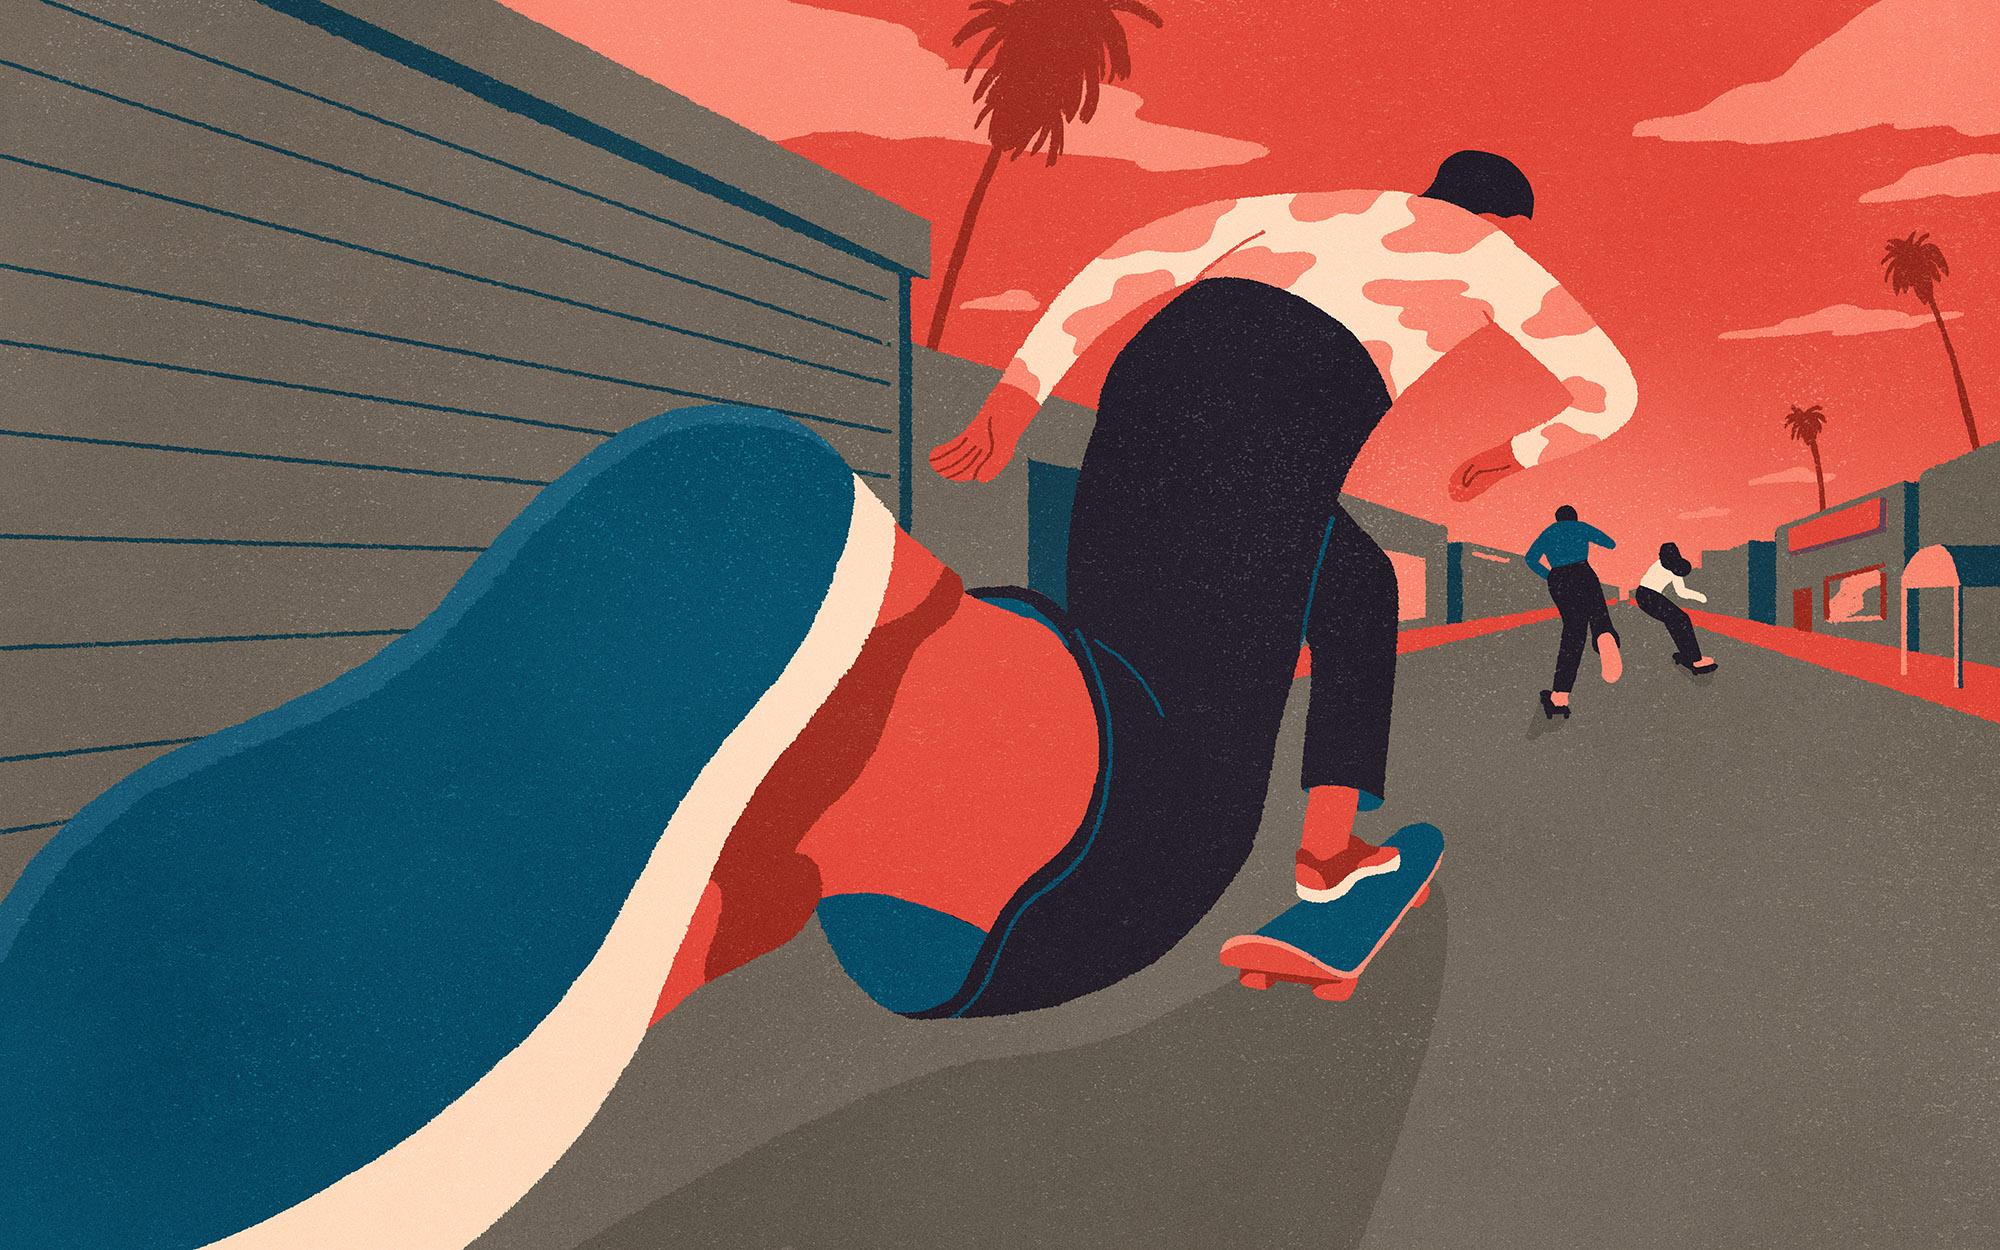 Peter Phobia Balance Kickflips Skateboard Illustration n°9